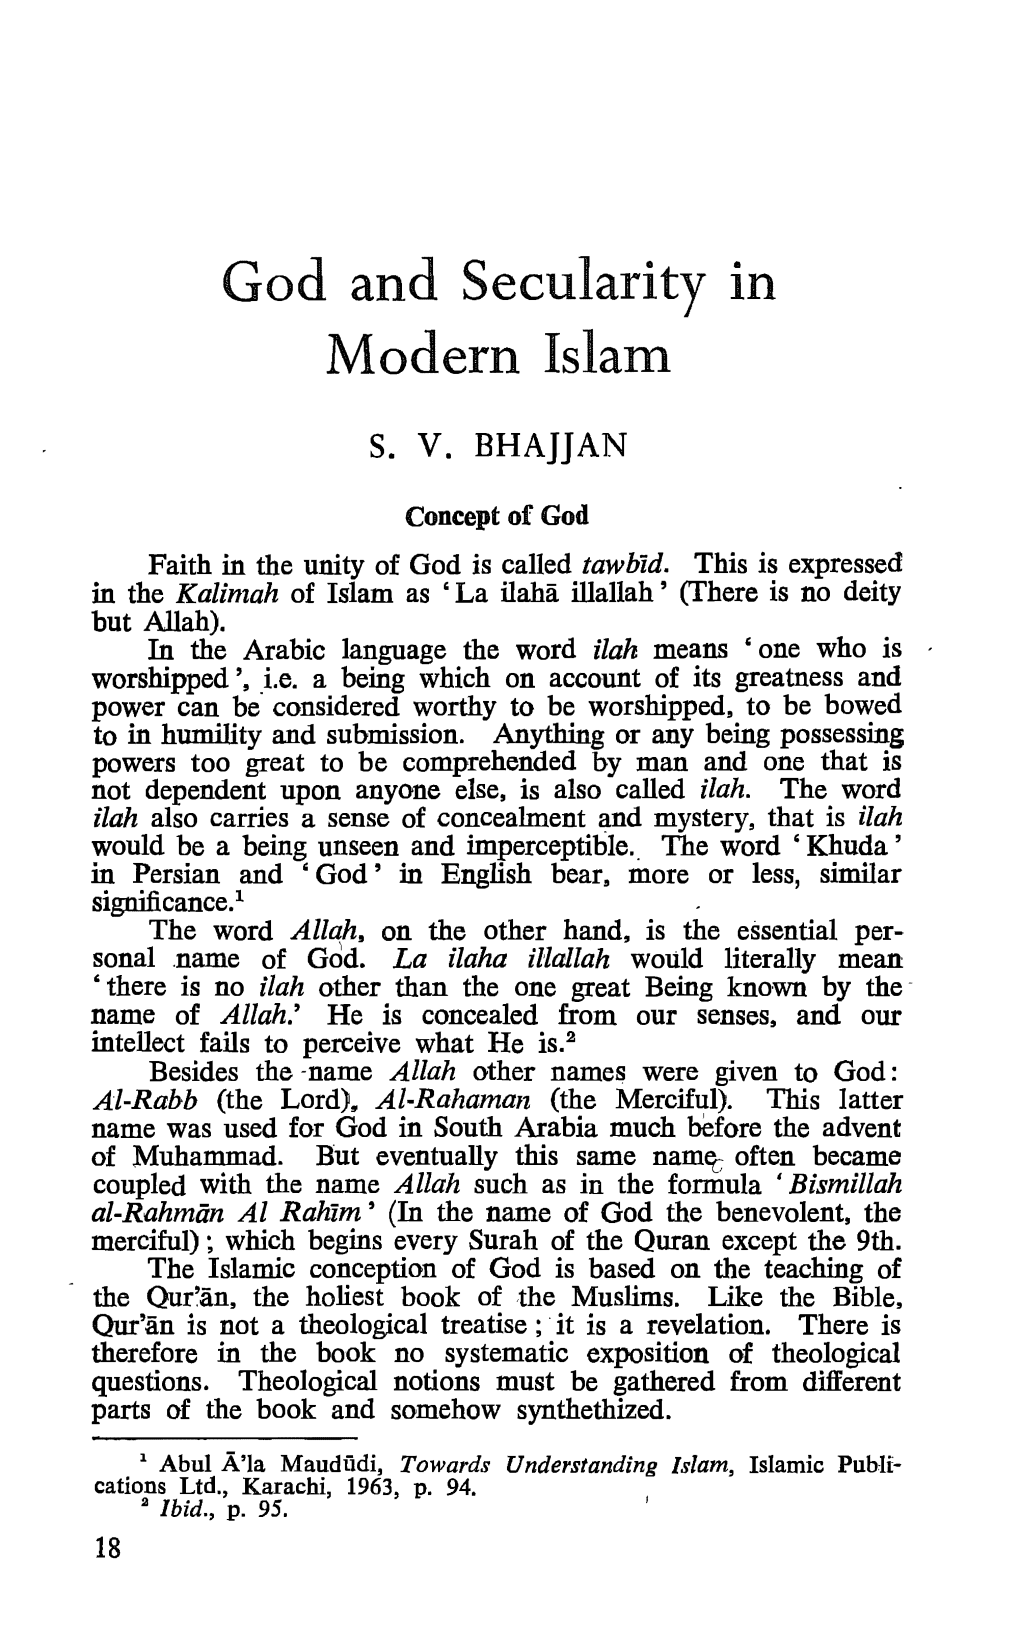 God and Secularity in Modern Islam